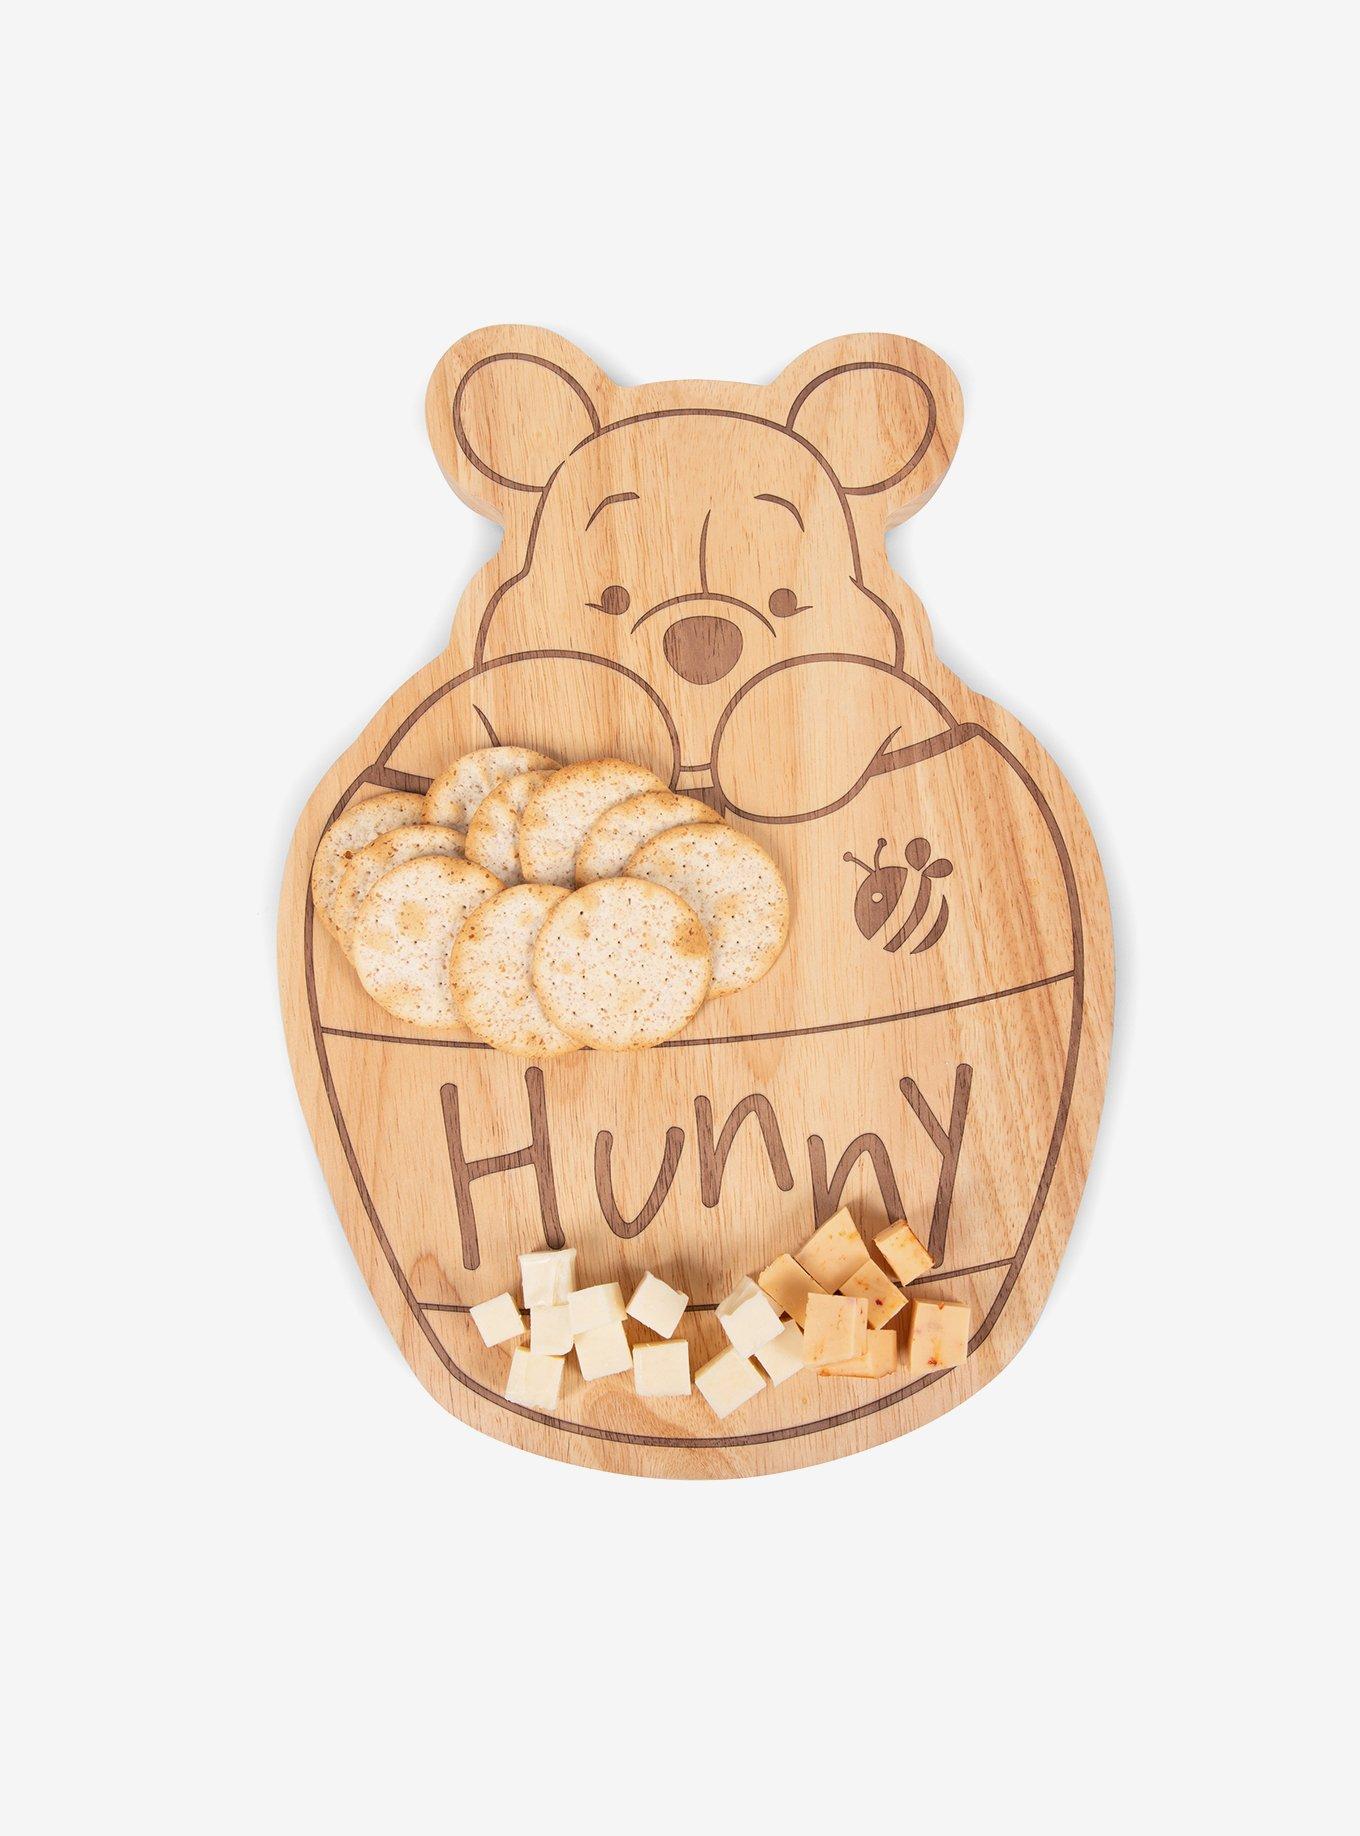 Disney Winnie the Pooh Honey Pot Serving Board